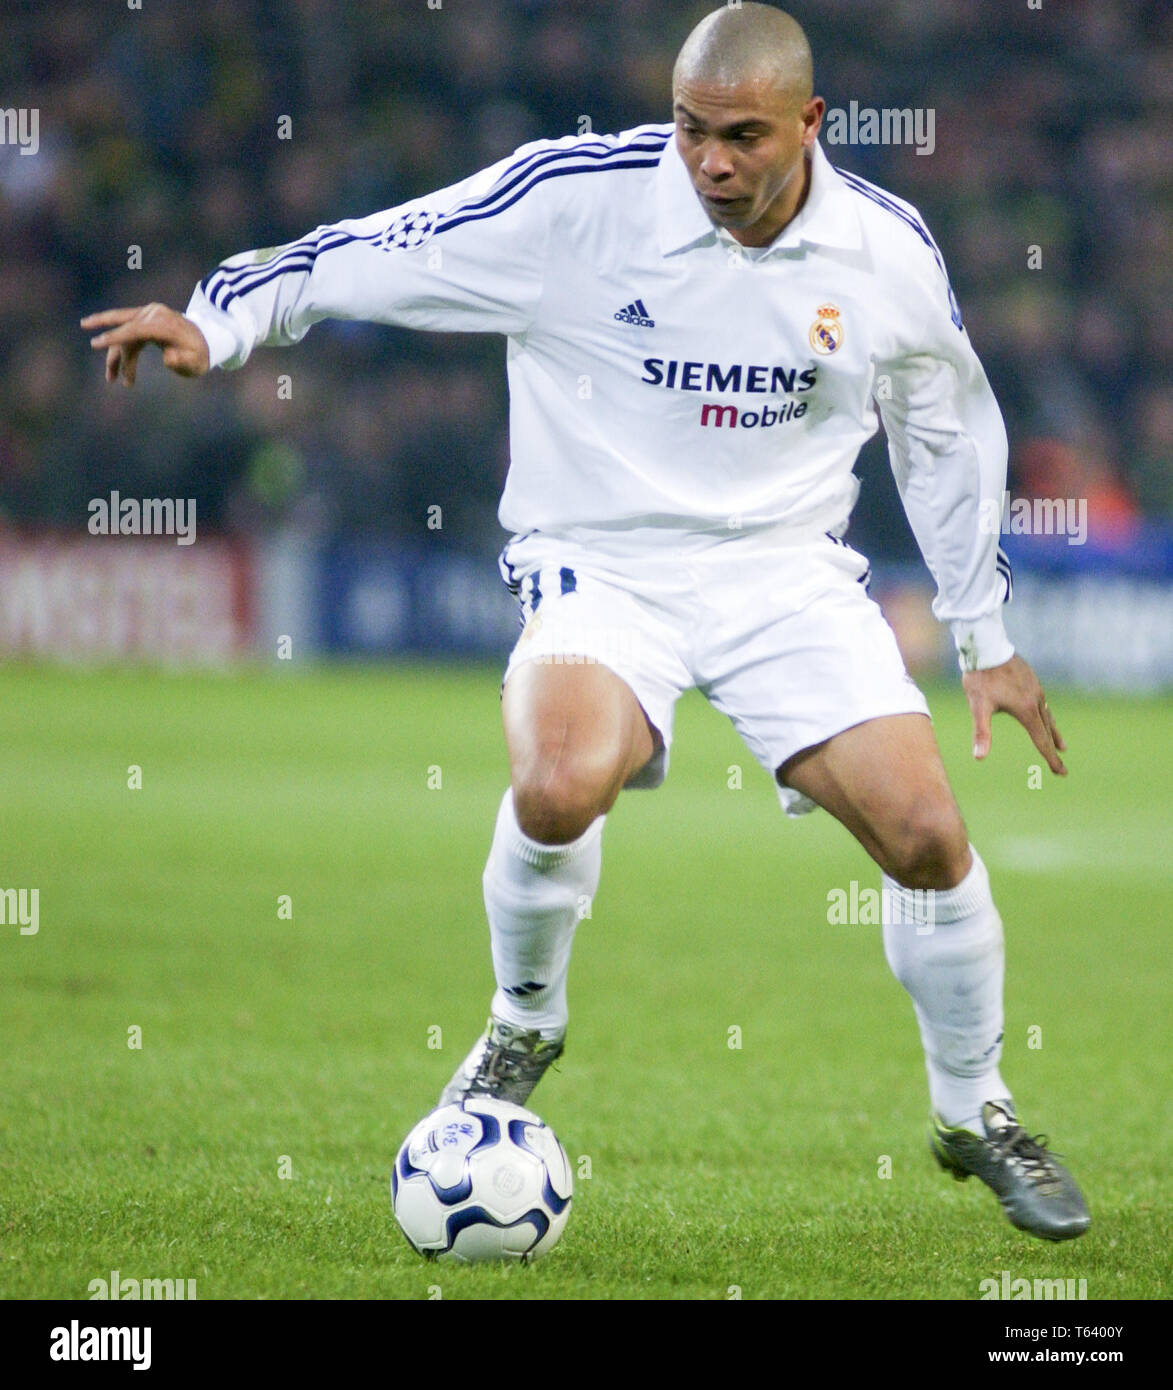 Ronaldo nazario real madrid fotografías e imágenes de alta resolución -  Alamy